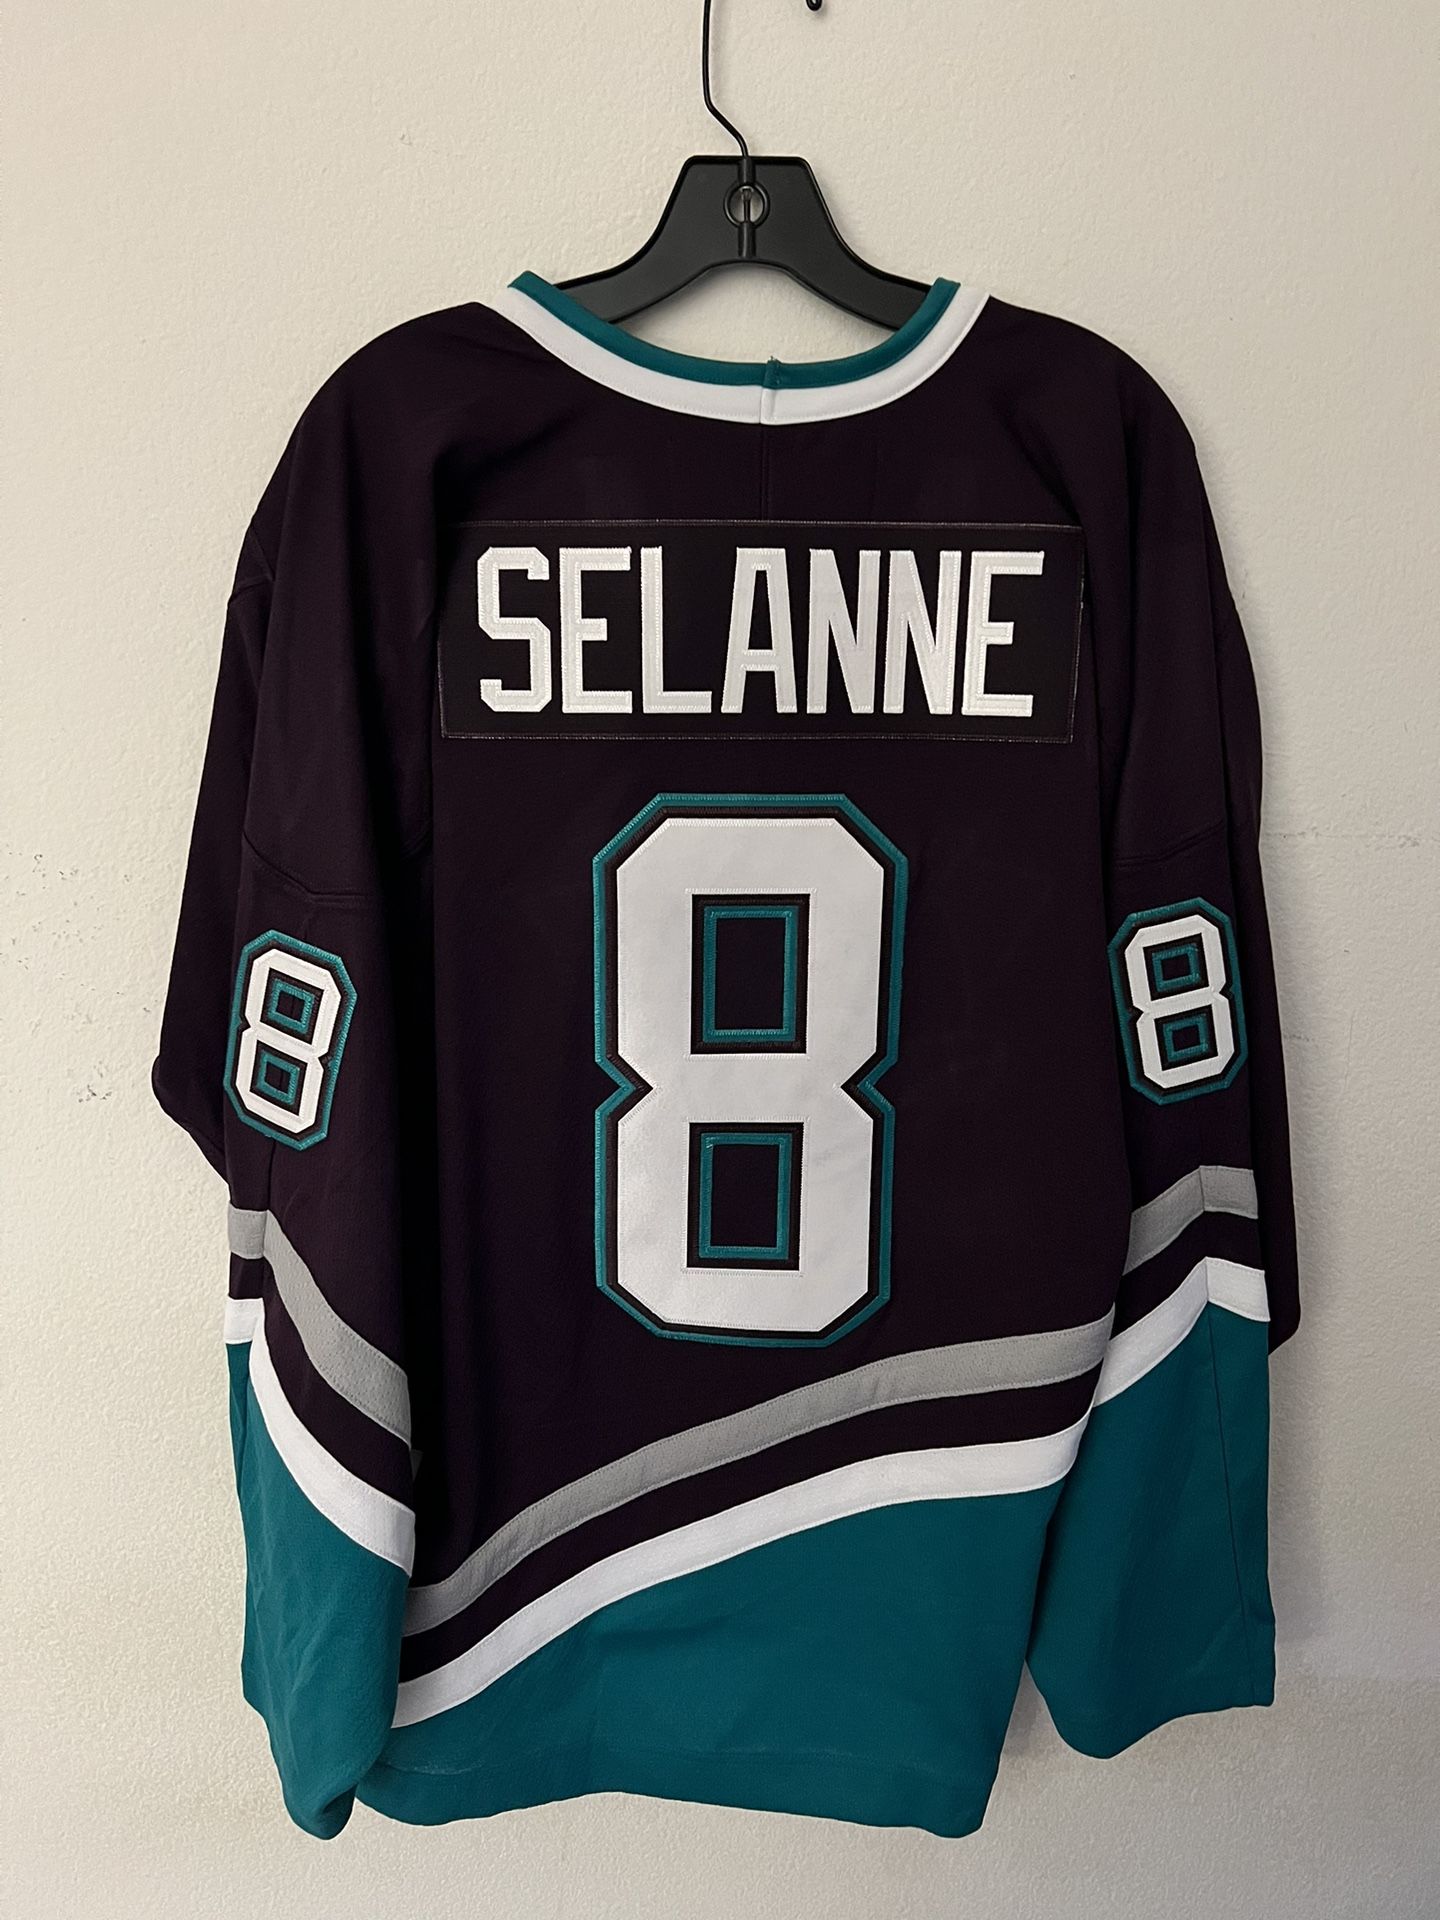 Teemu Selanne Tribute Night Jersey for Sale in Anaheim, CA - OfferUp